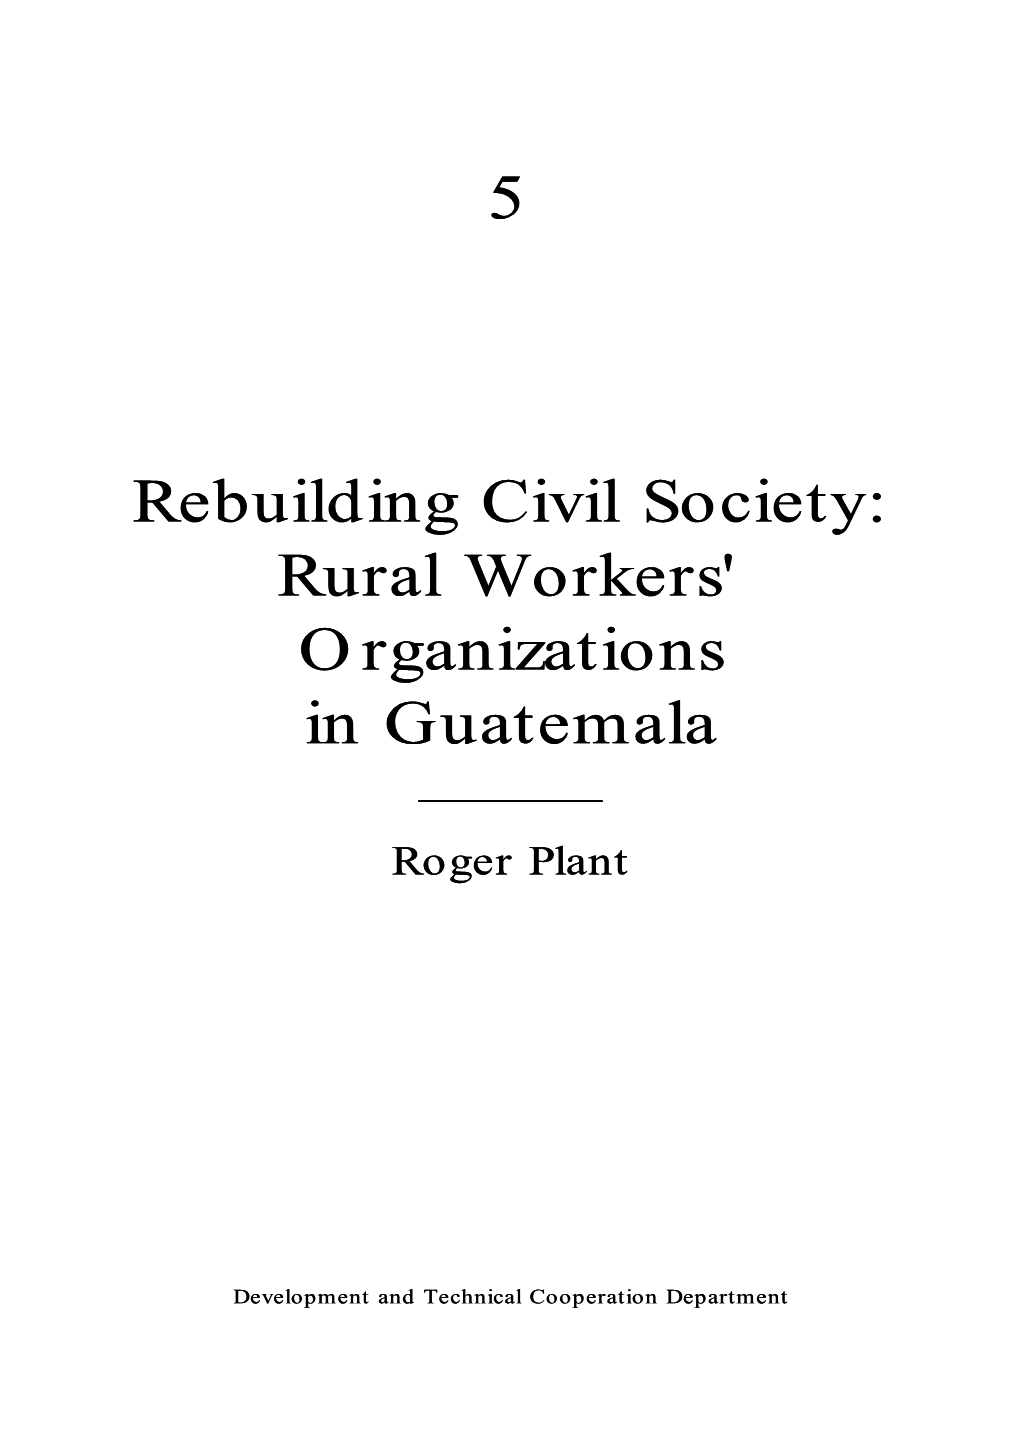 Rural Workers' Organizations in Guatemala